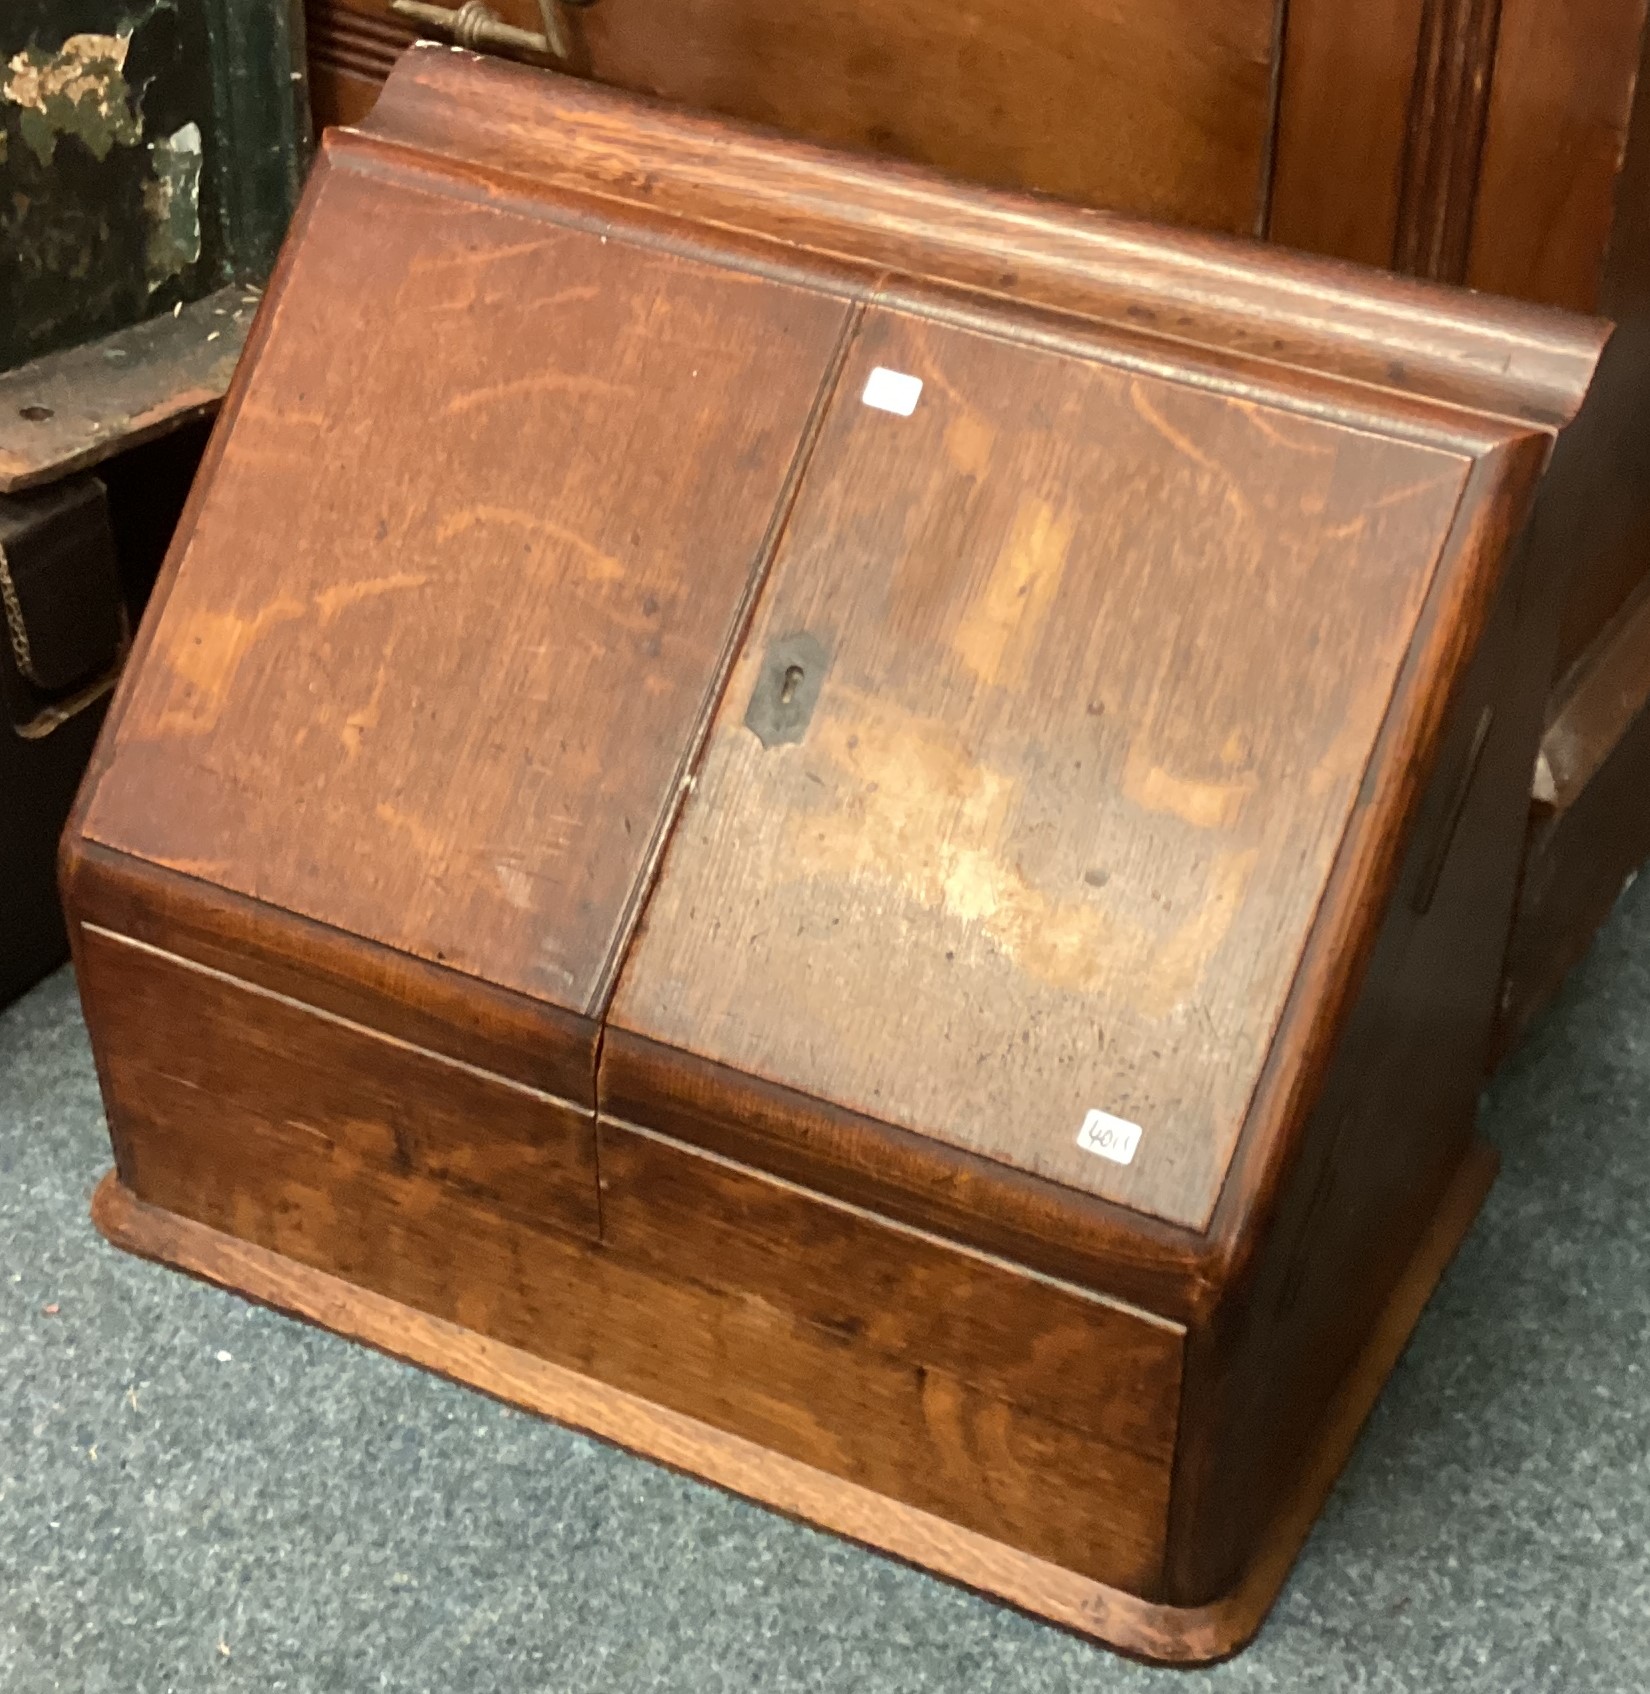 An old oak stationery box.